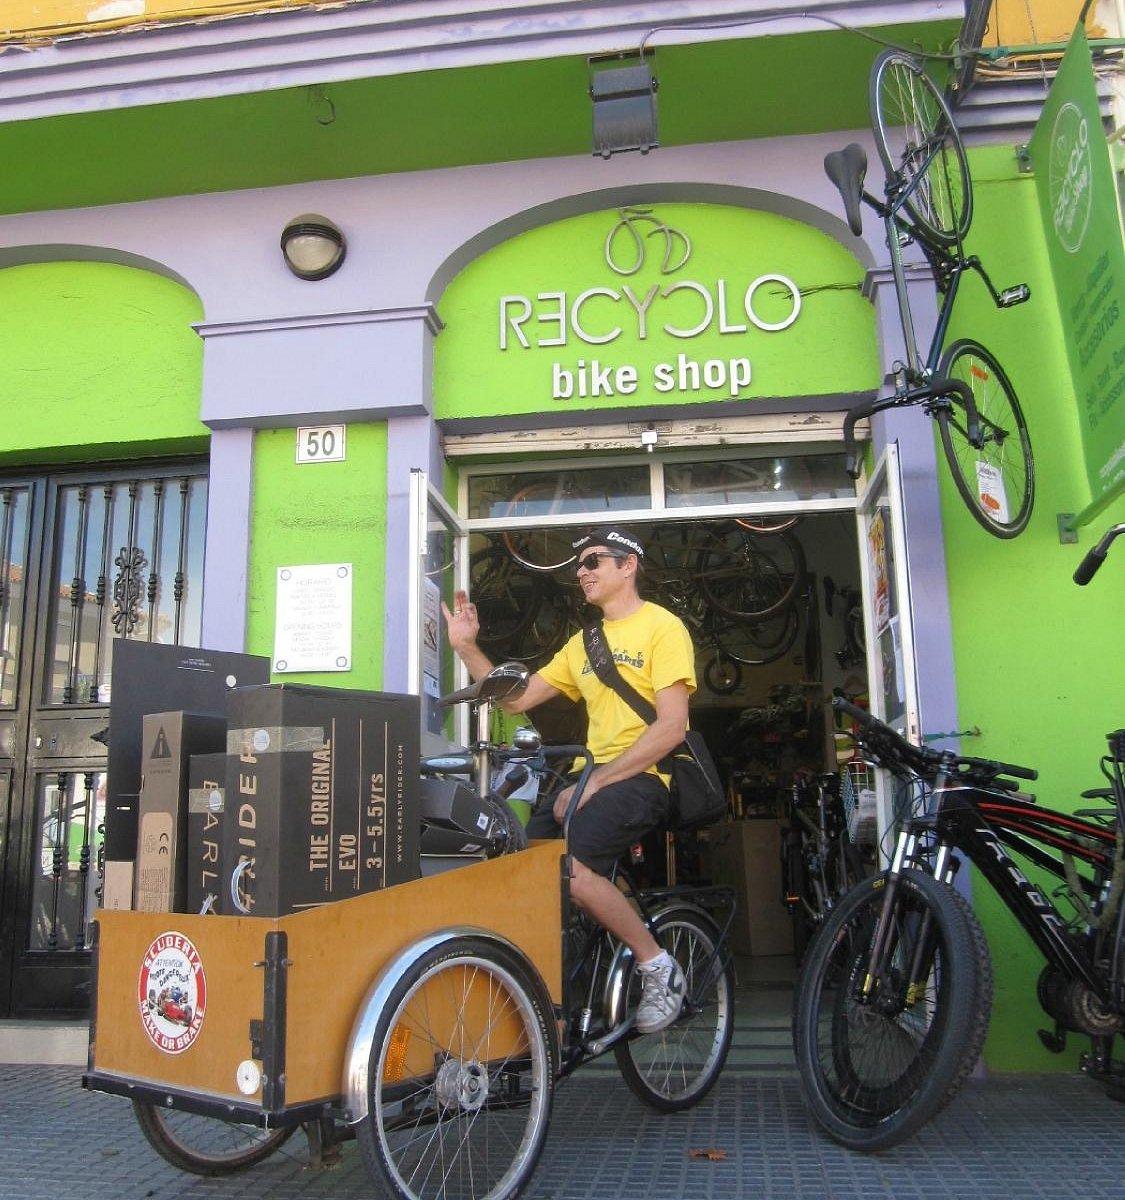 Recyclo Bike